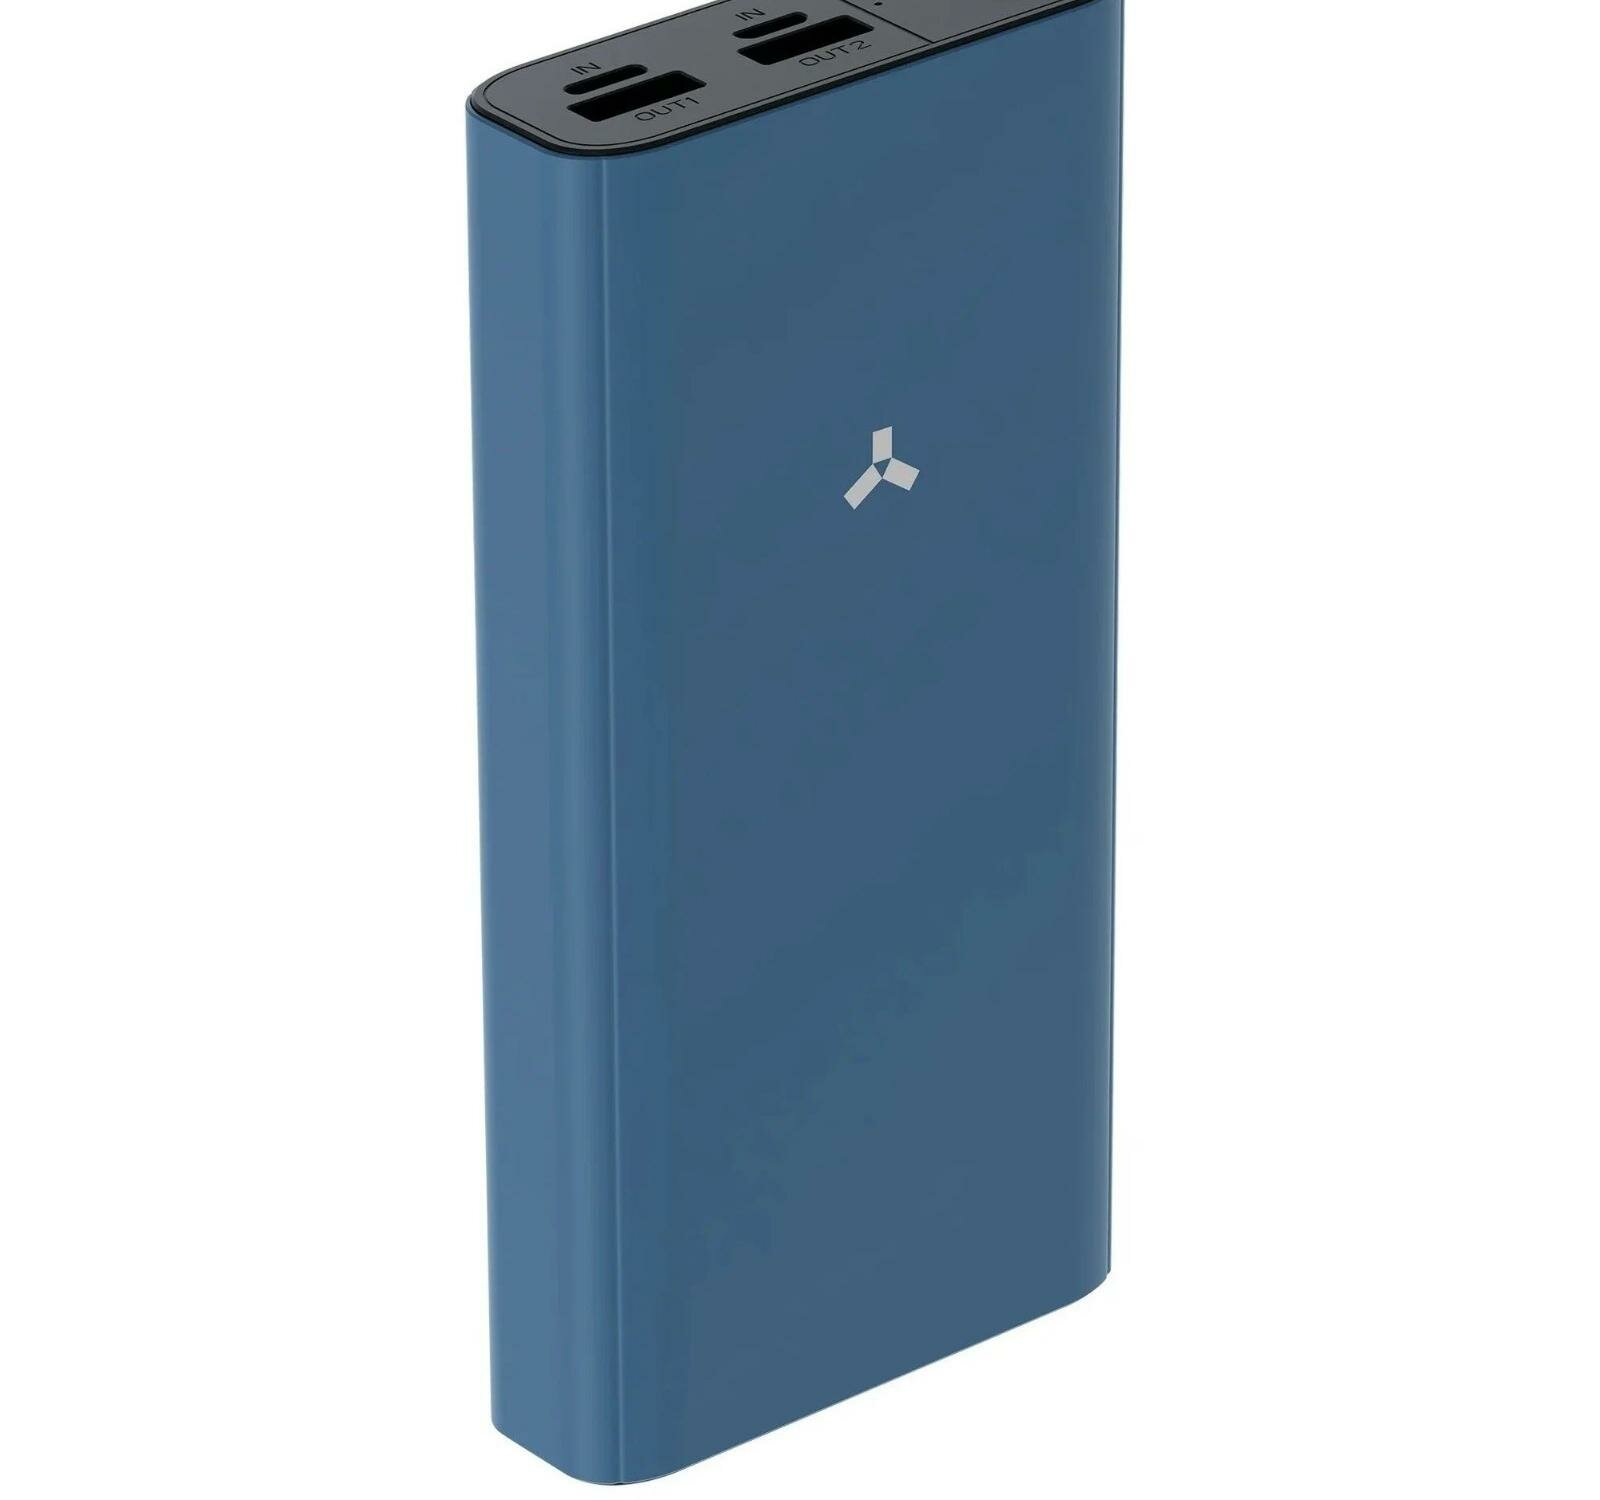 Внешний аккумулятор Accesstyle Arnica 20M, 20000 мАч, 2 USB, 2.1 А, индикатор, синий